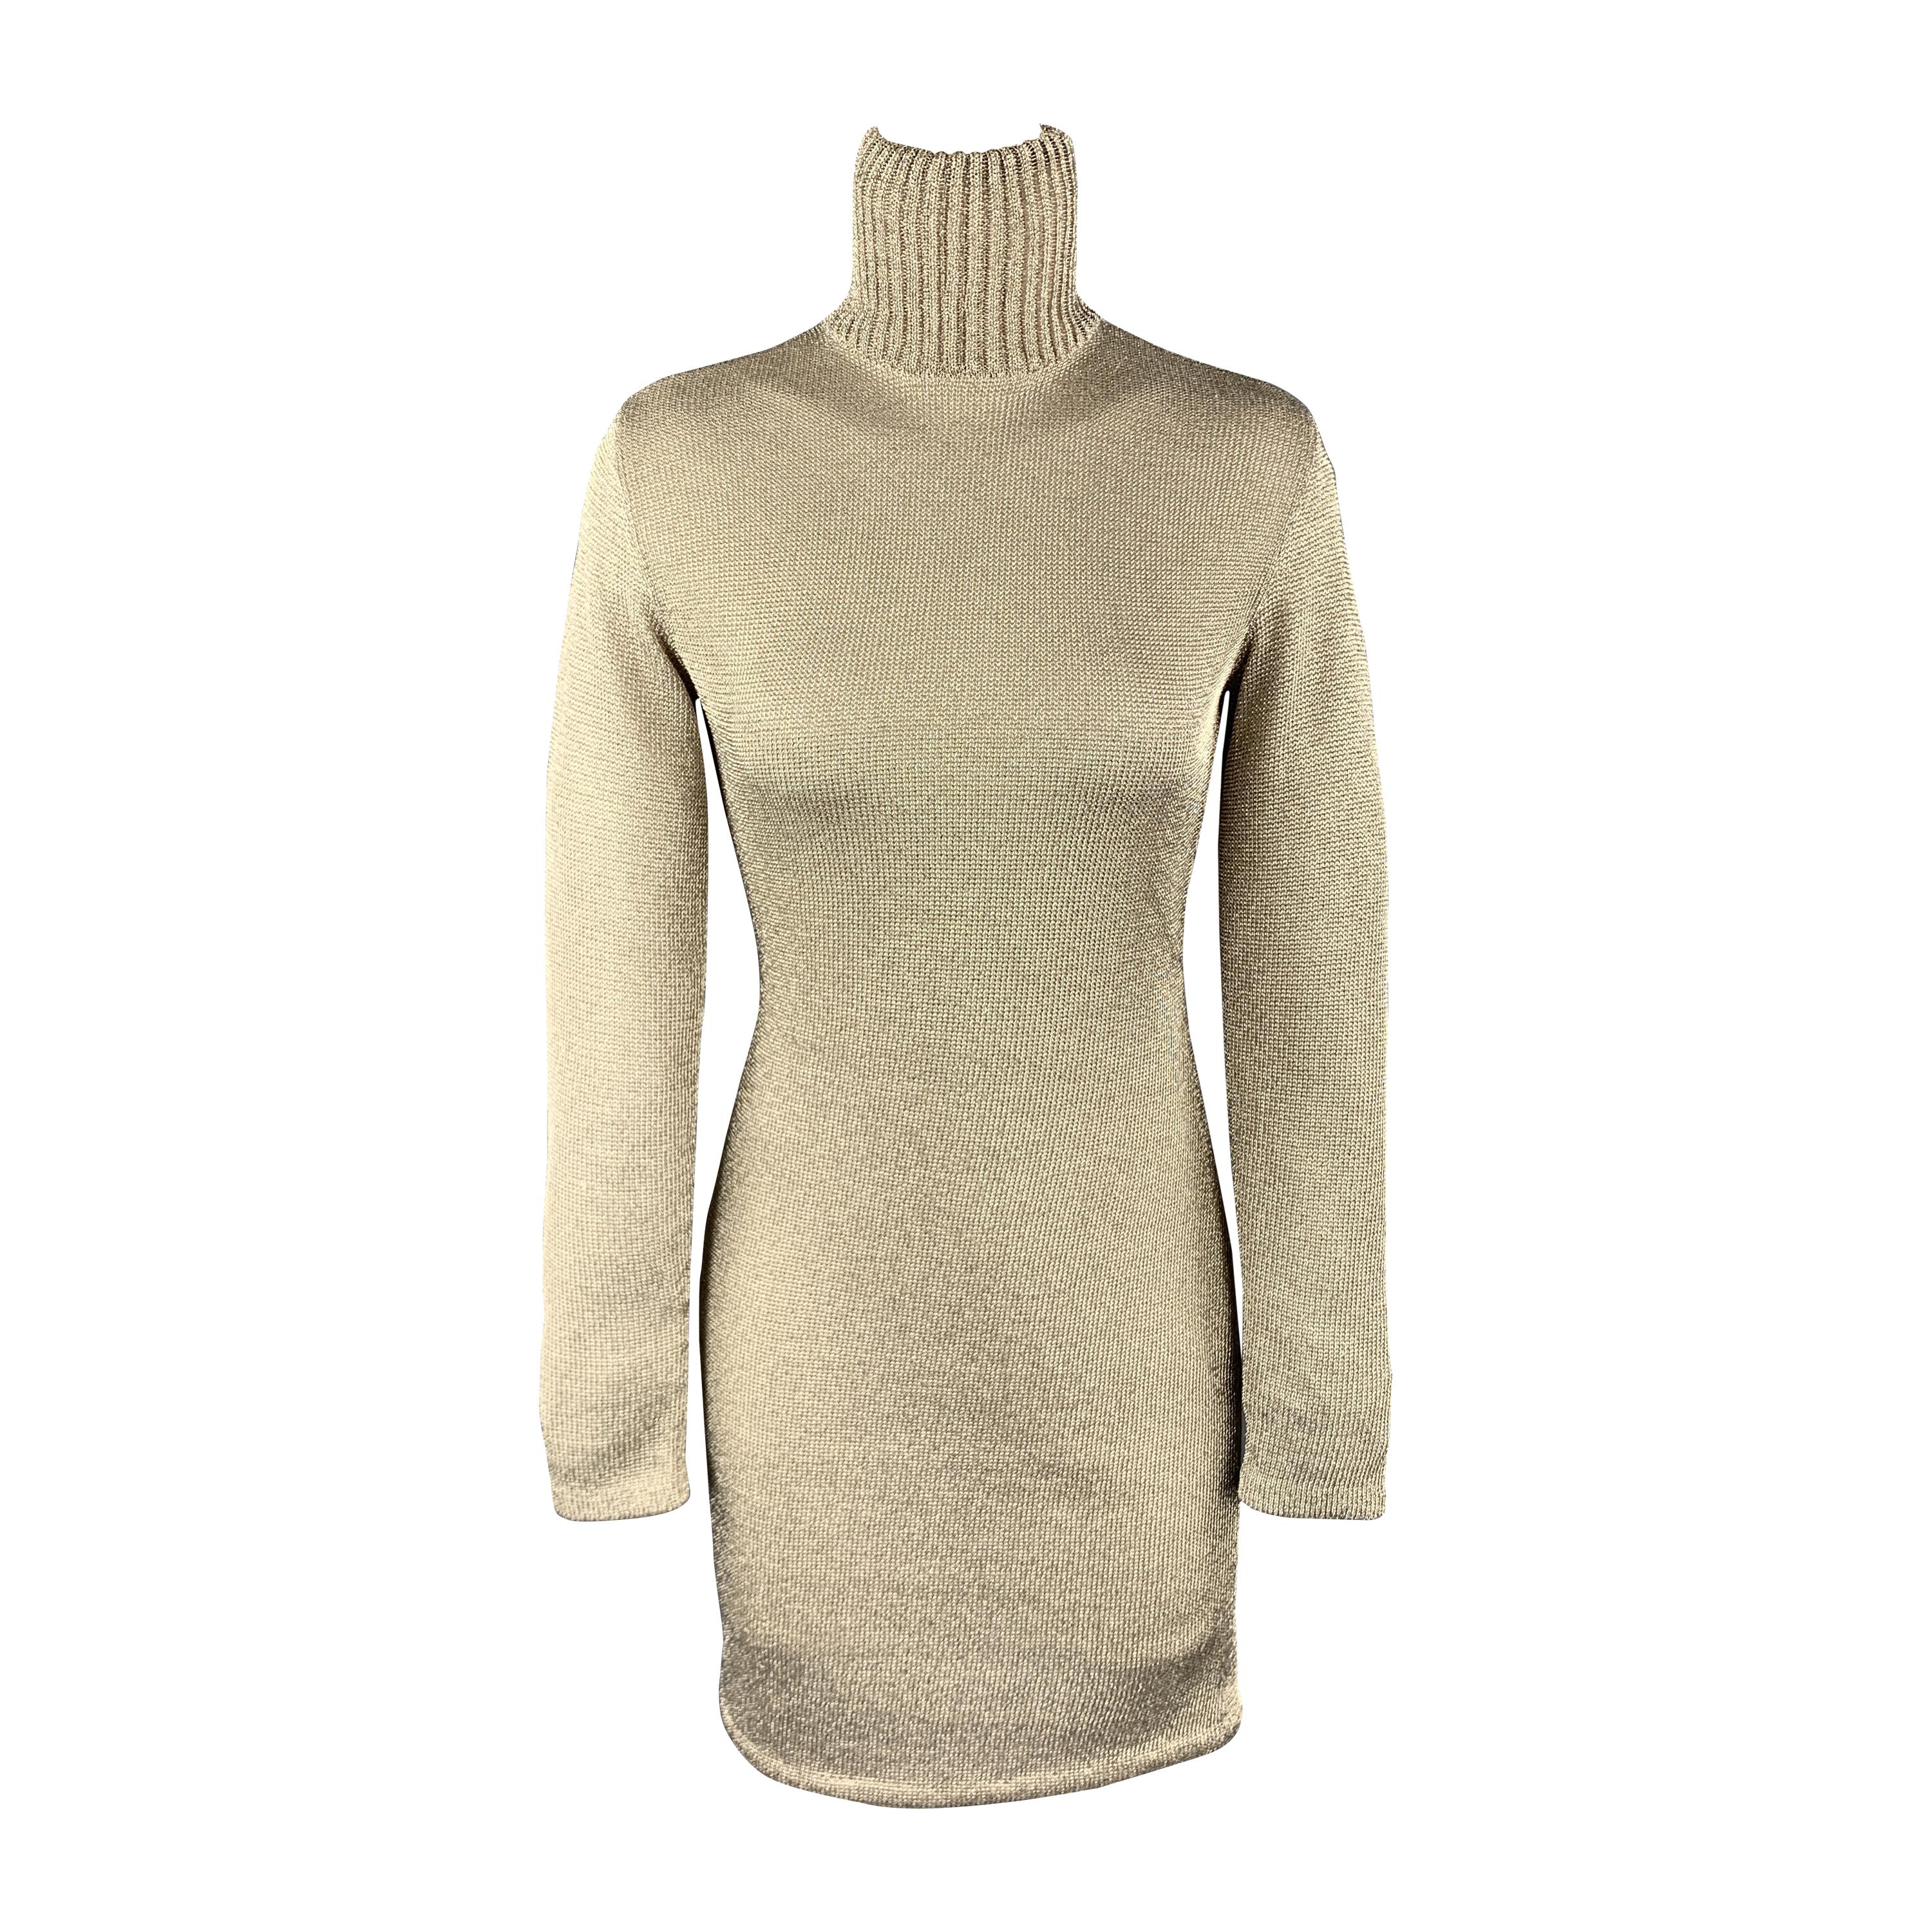 RALPH LAUREN Size S Metallic Gold Knit Turtleneck Sweater Cocktail Dress